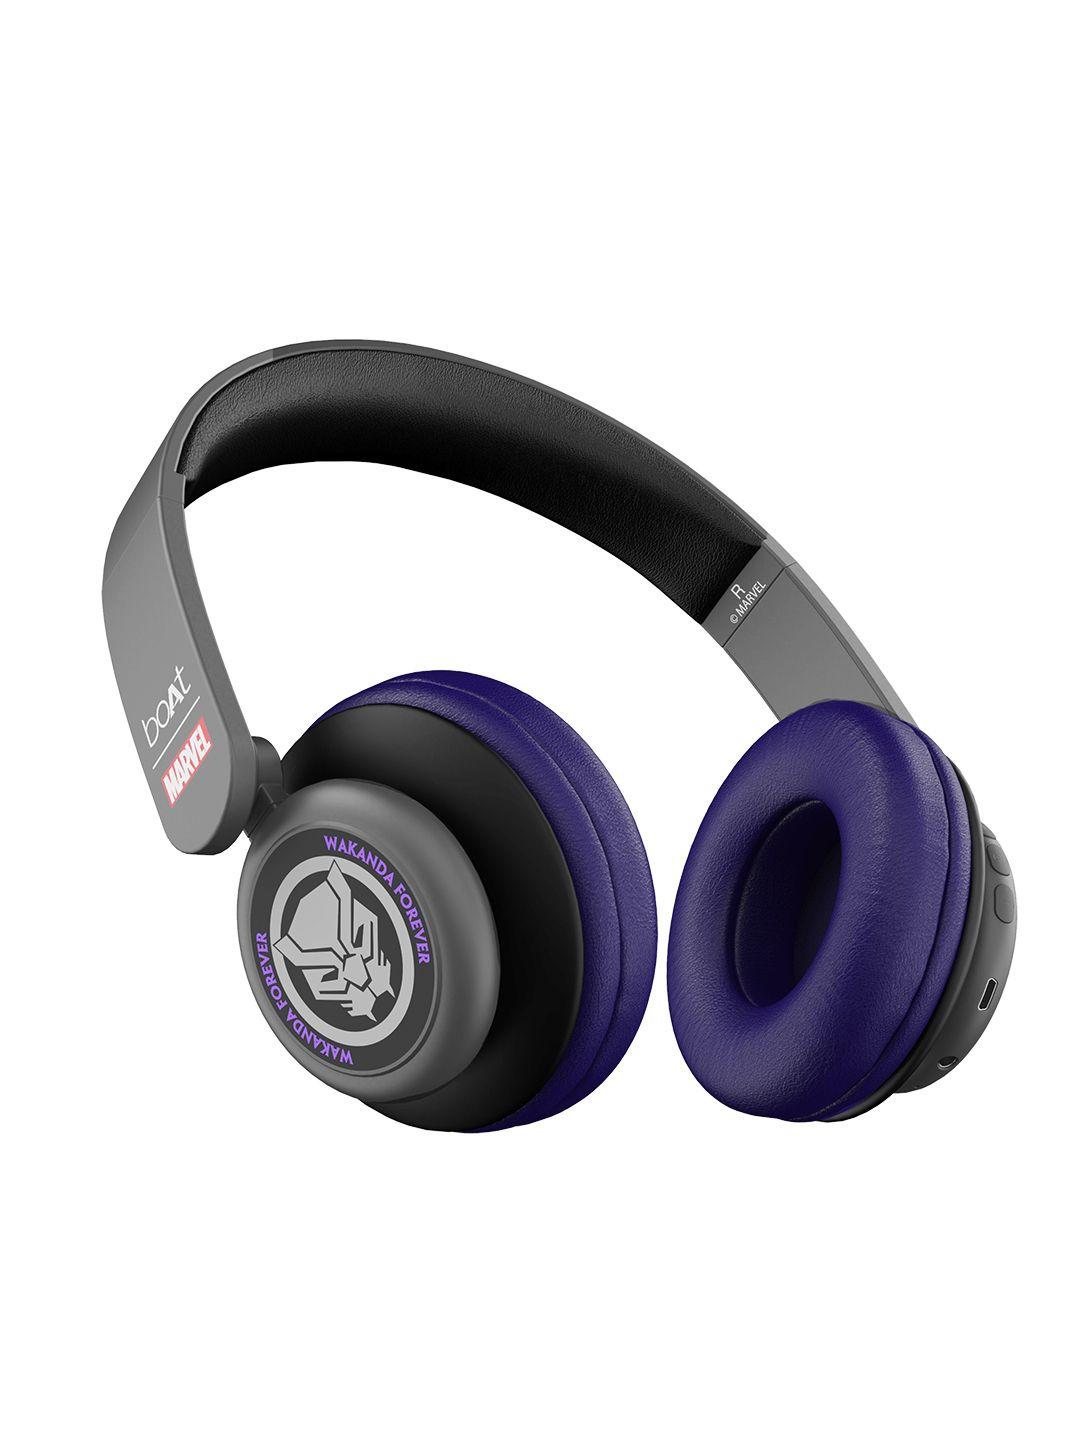 boat rockerz 450 m marvel edition wireless headphone - king's purple